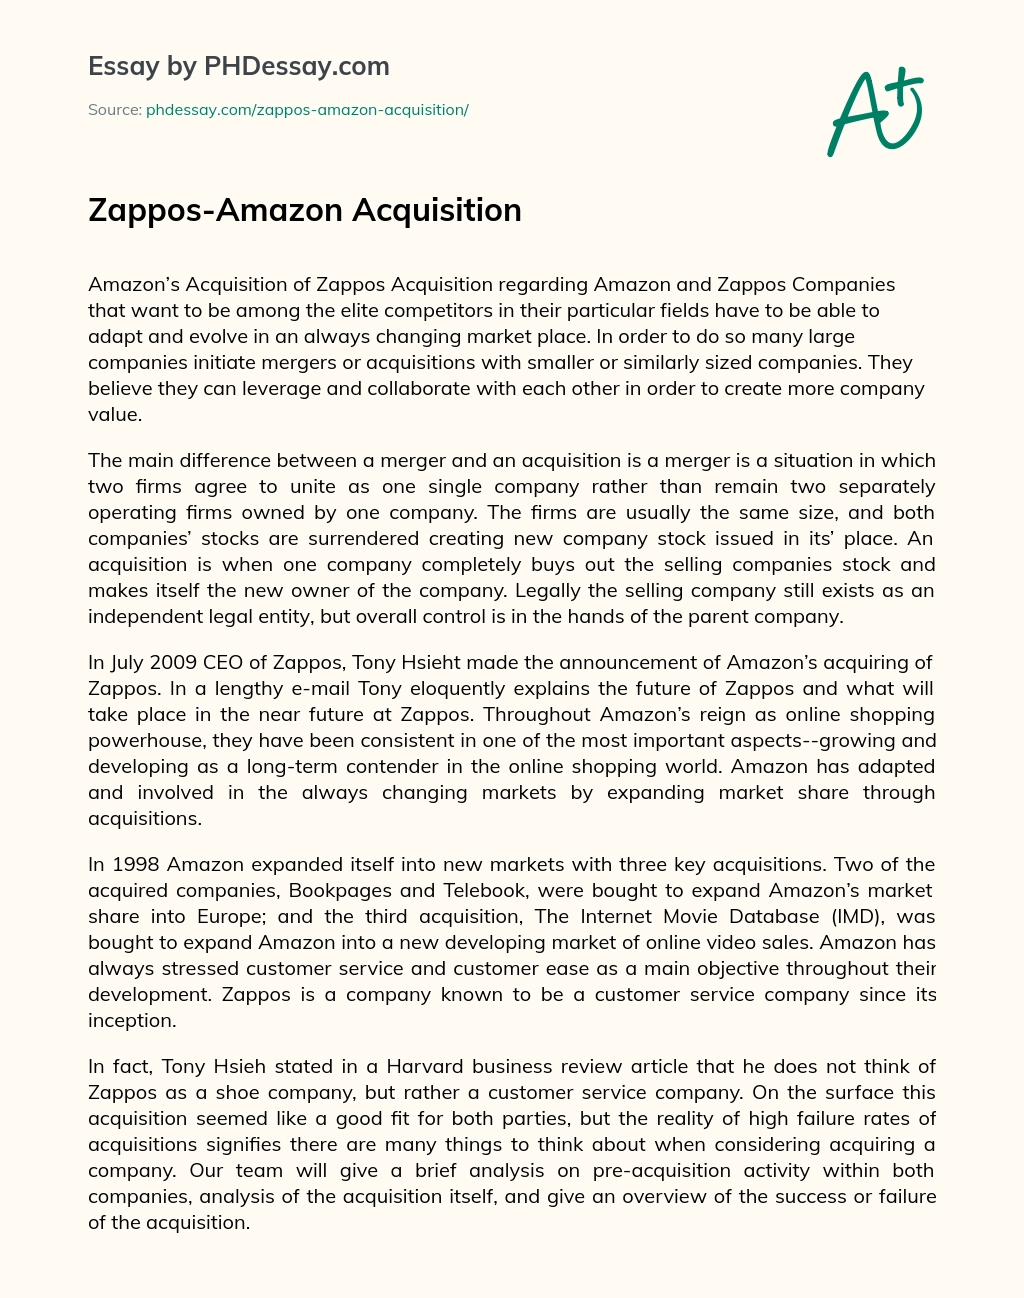 Zappos-Amazon Acquisition essay